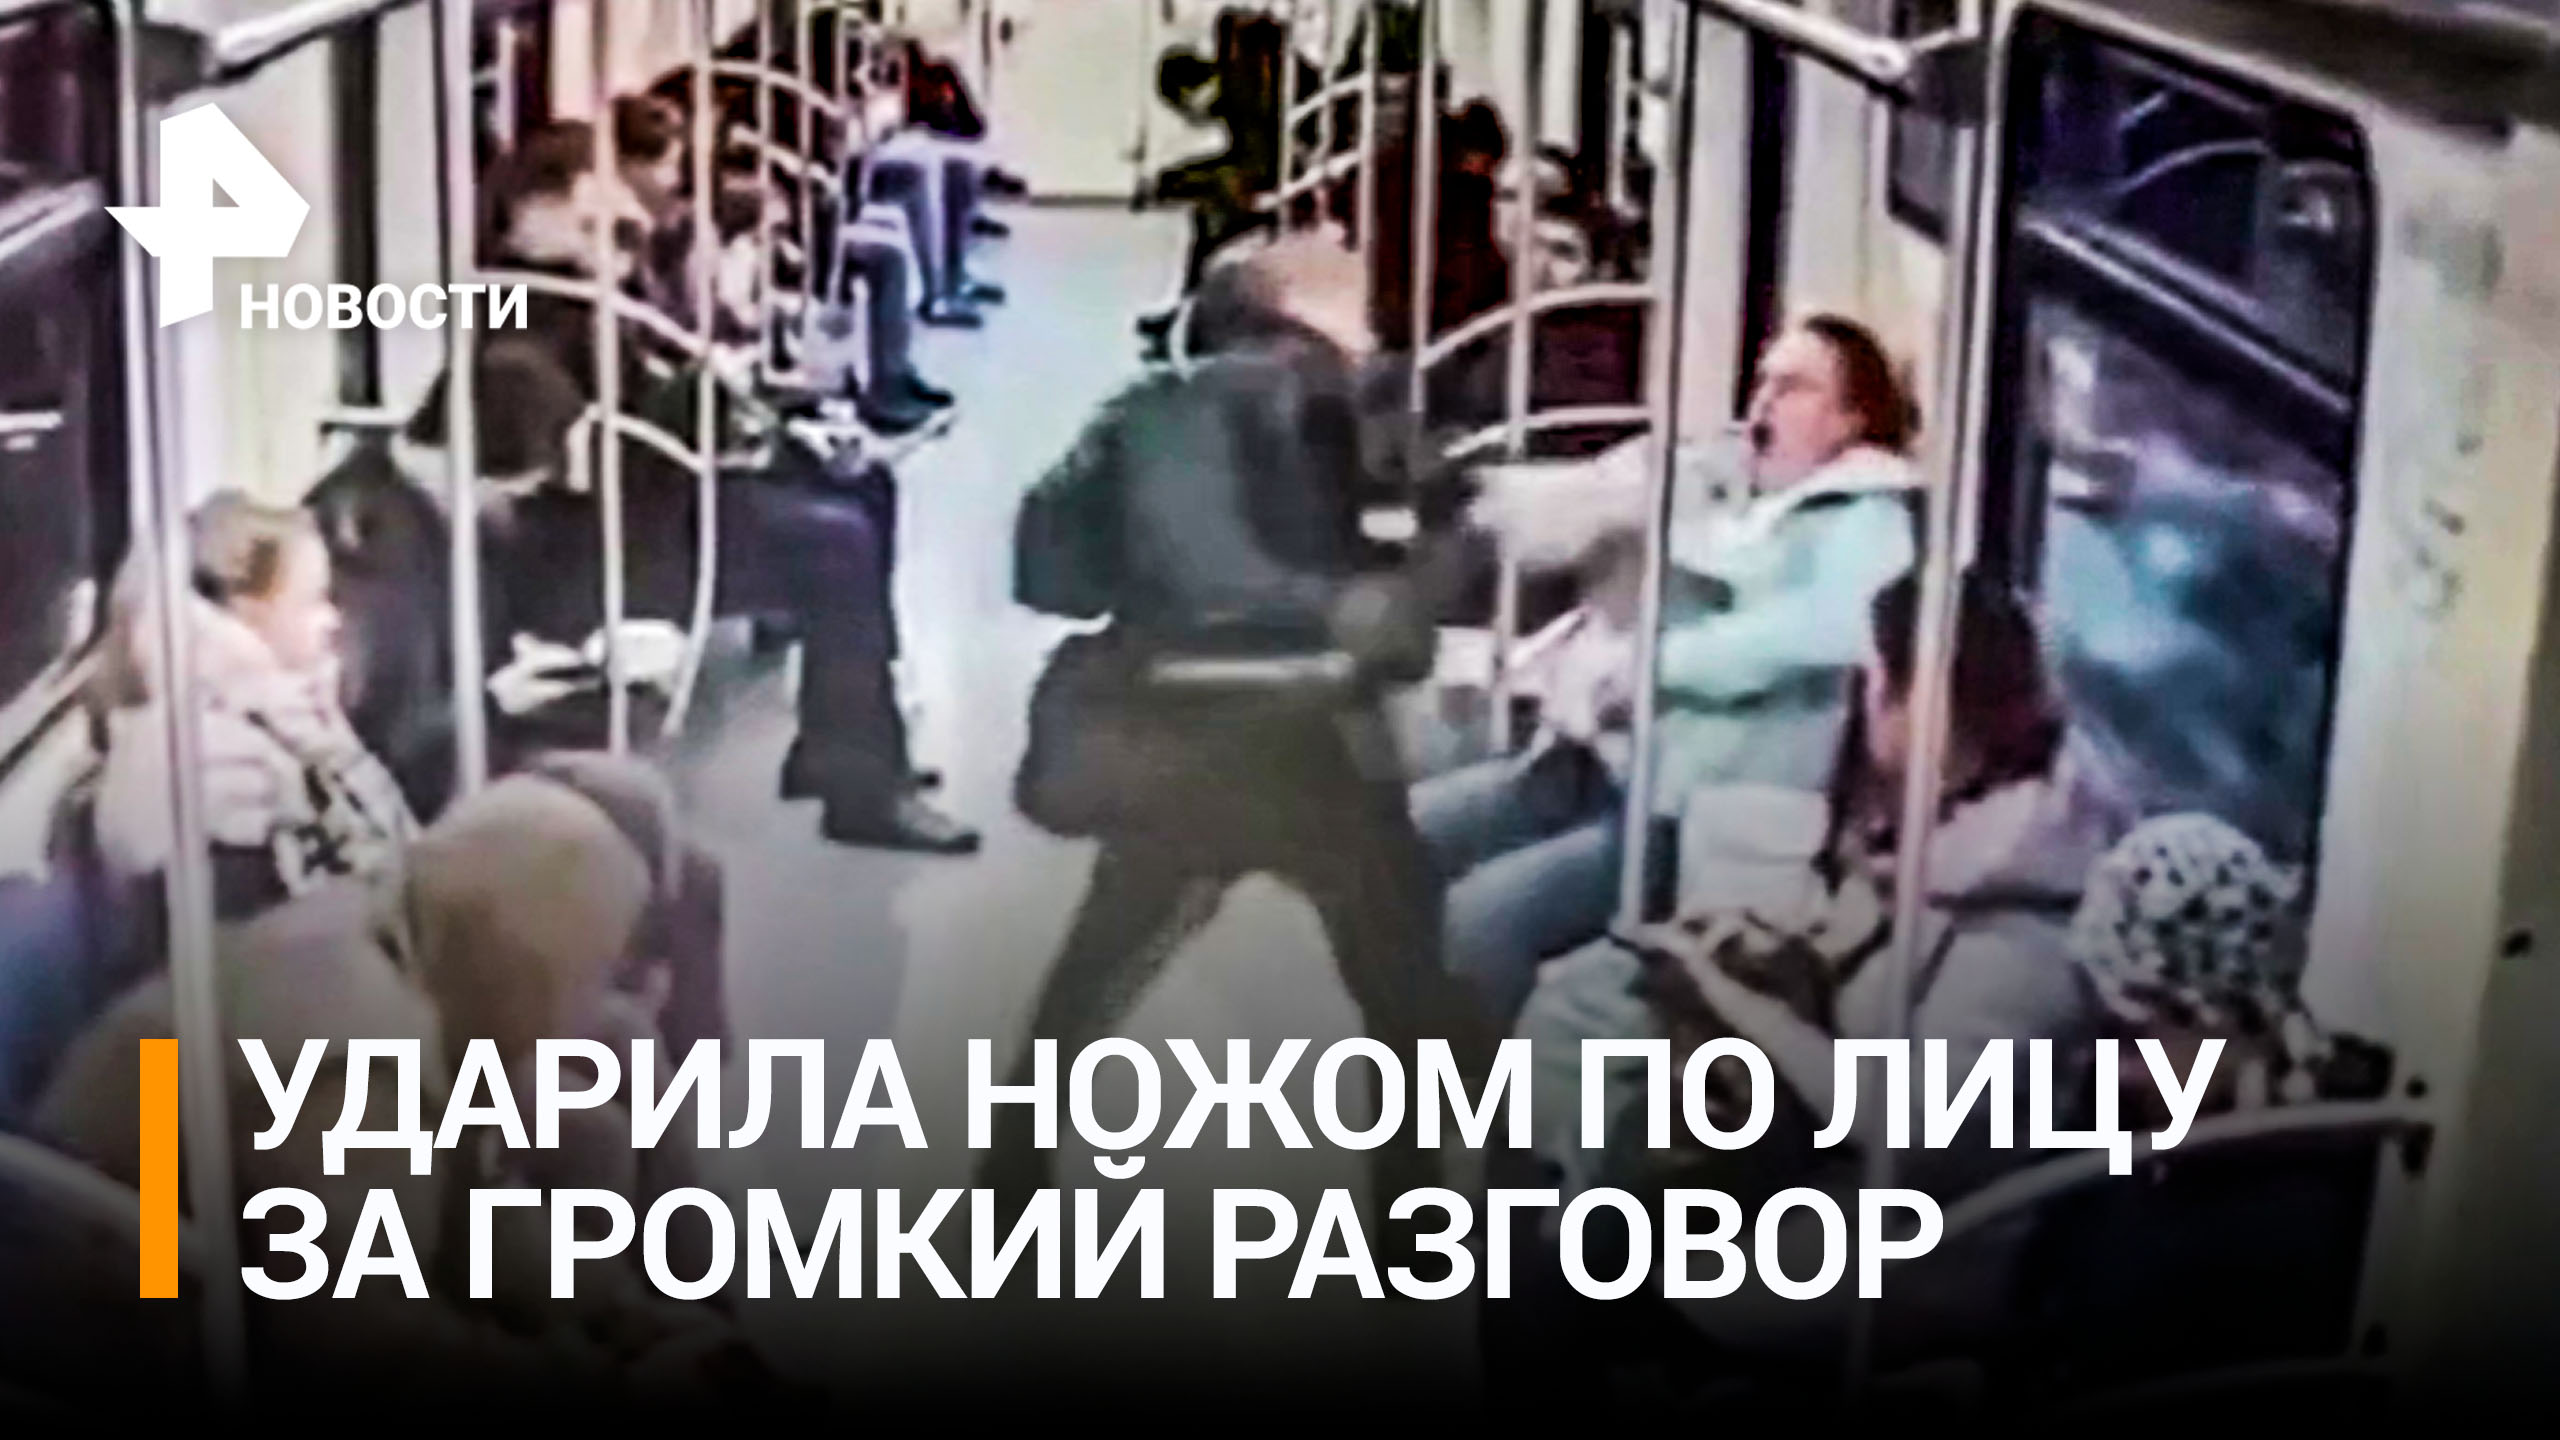 На пассажирку метро напала бритоголовая женщина с ножом из-за громкого разговора по телефону